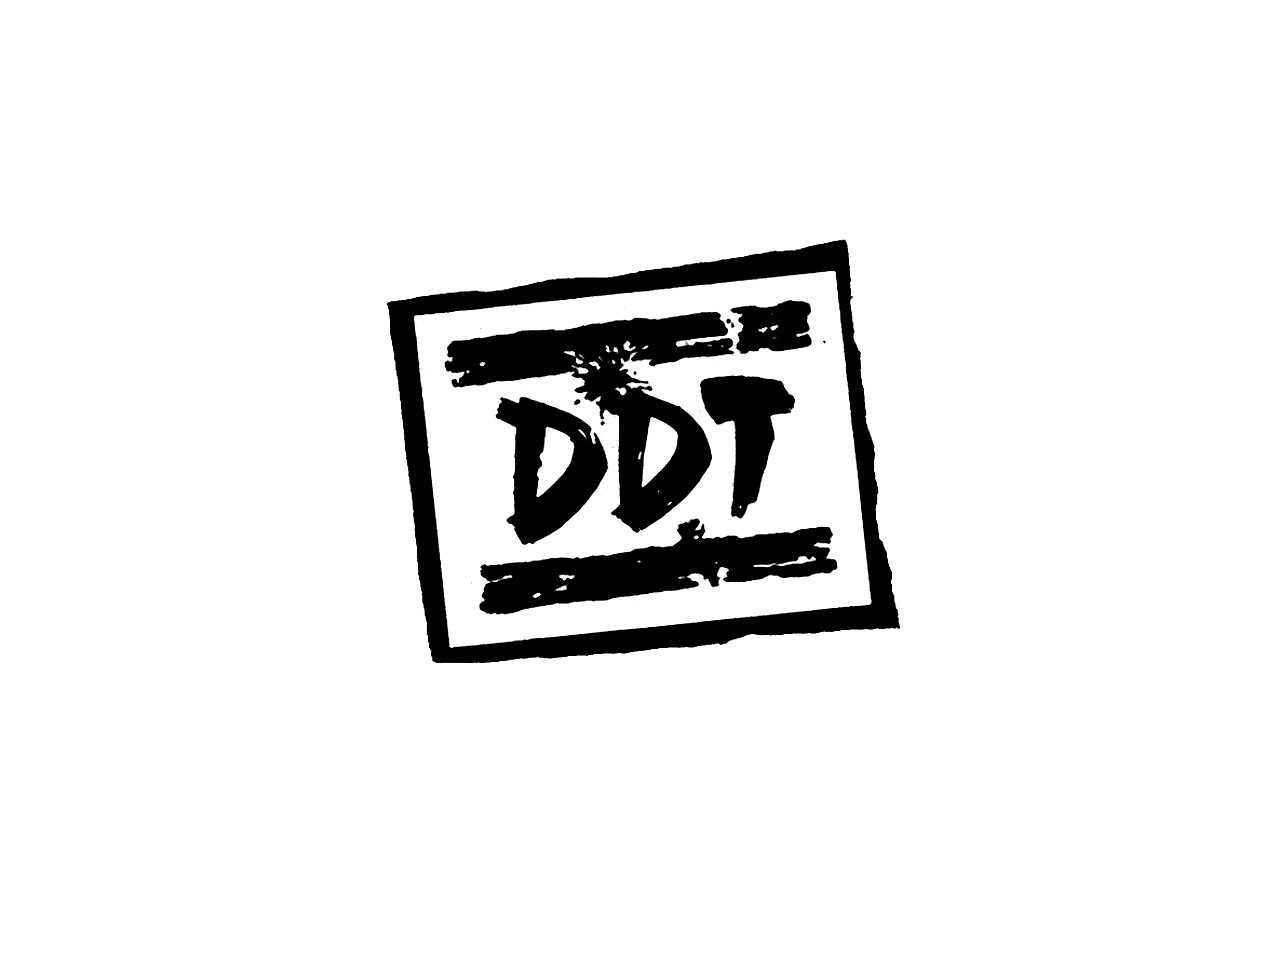 Д д т прозрачный. ДДТ логотип. ДДТ эмблема группы. ДДТ группа надпись. Логотип группы DDT.